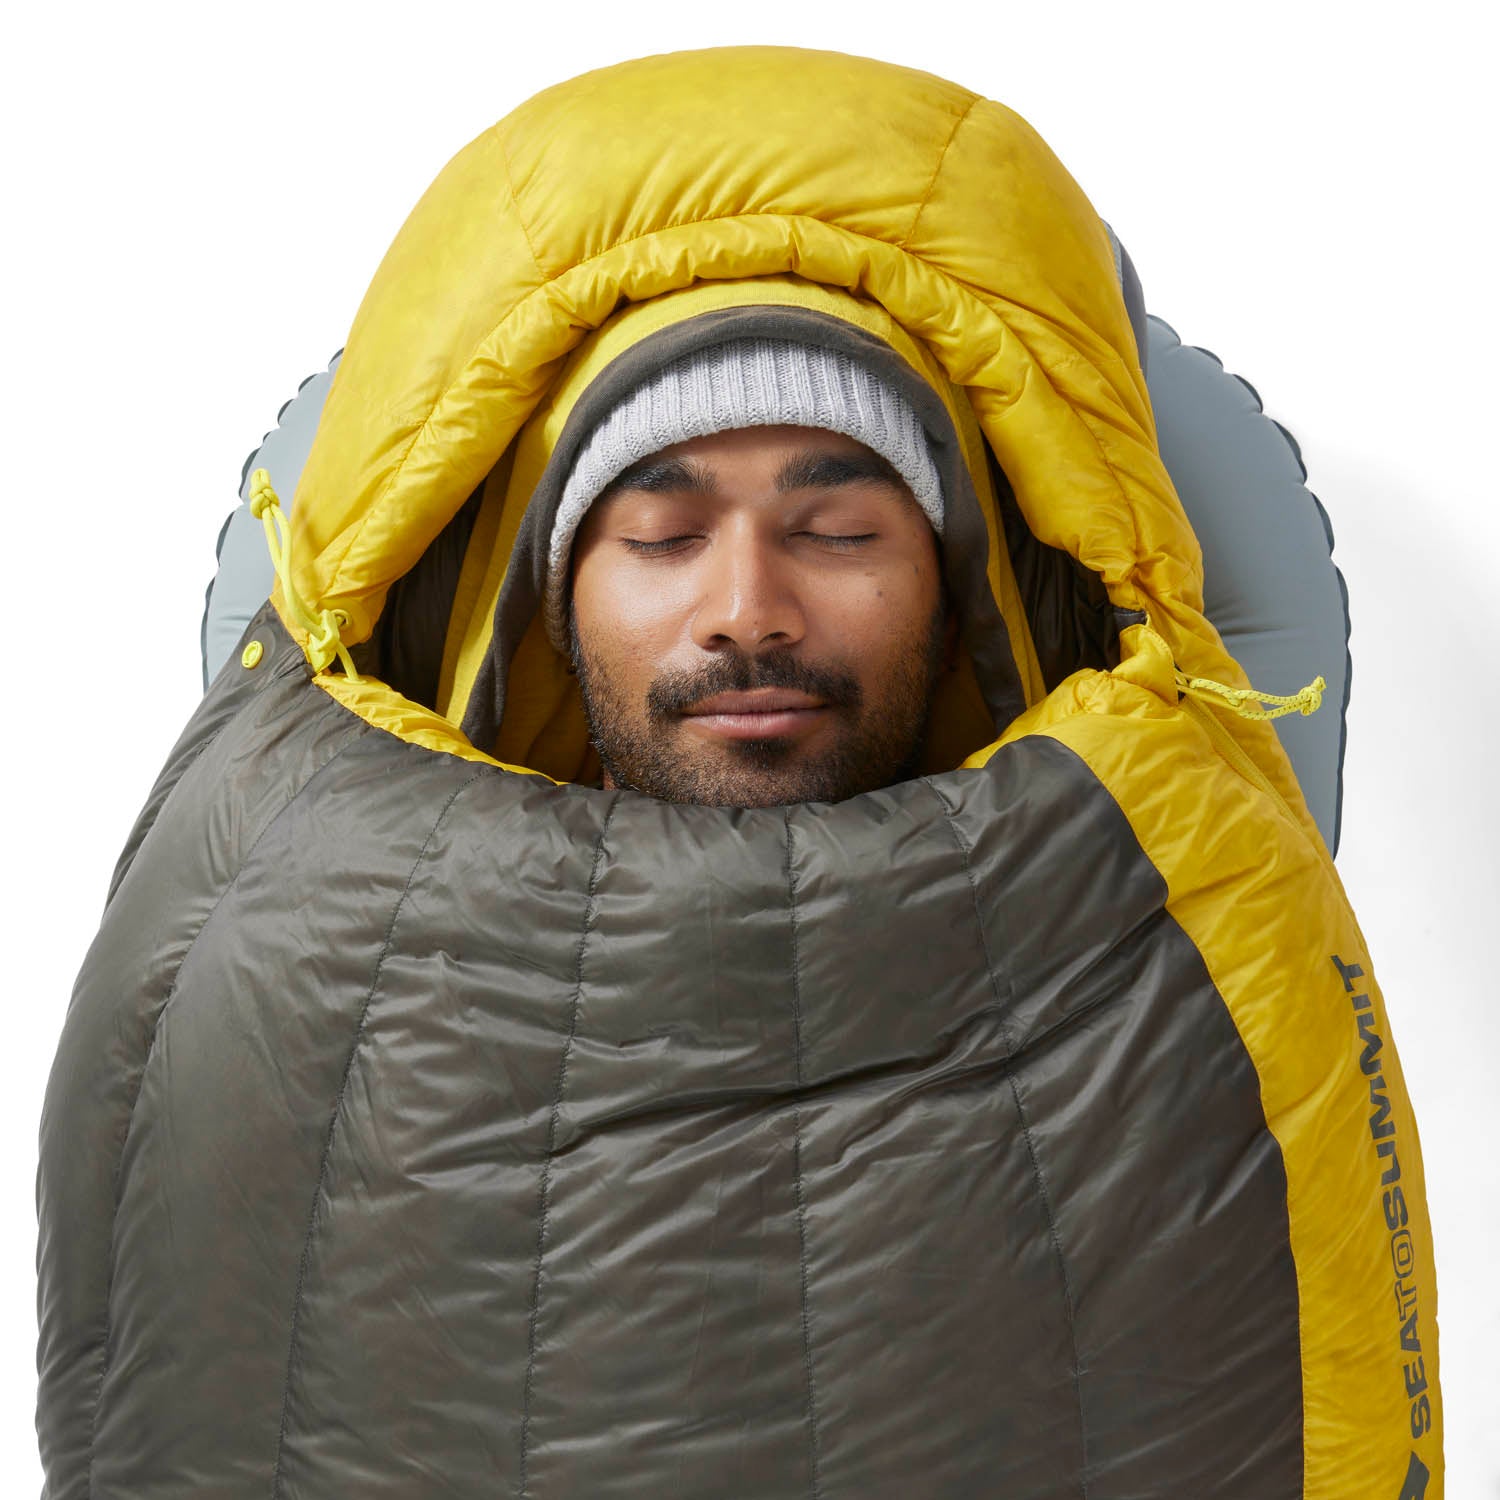 Spark Down Sleeping Bag (-18°C - 7°C)